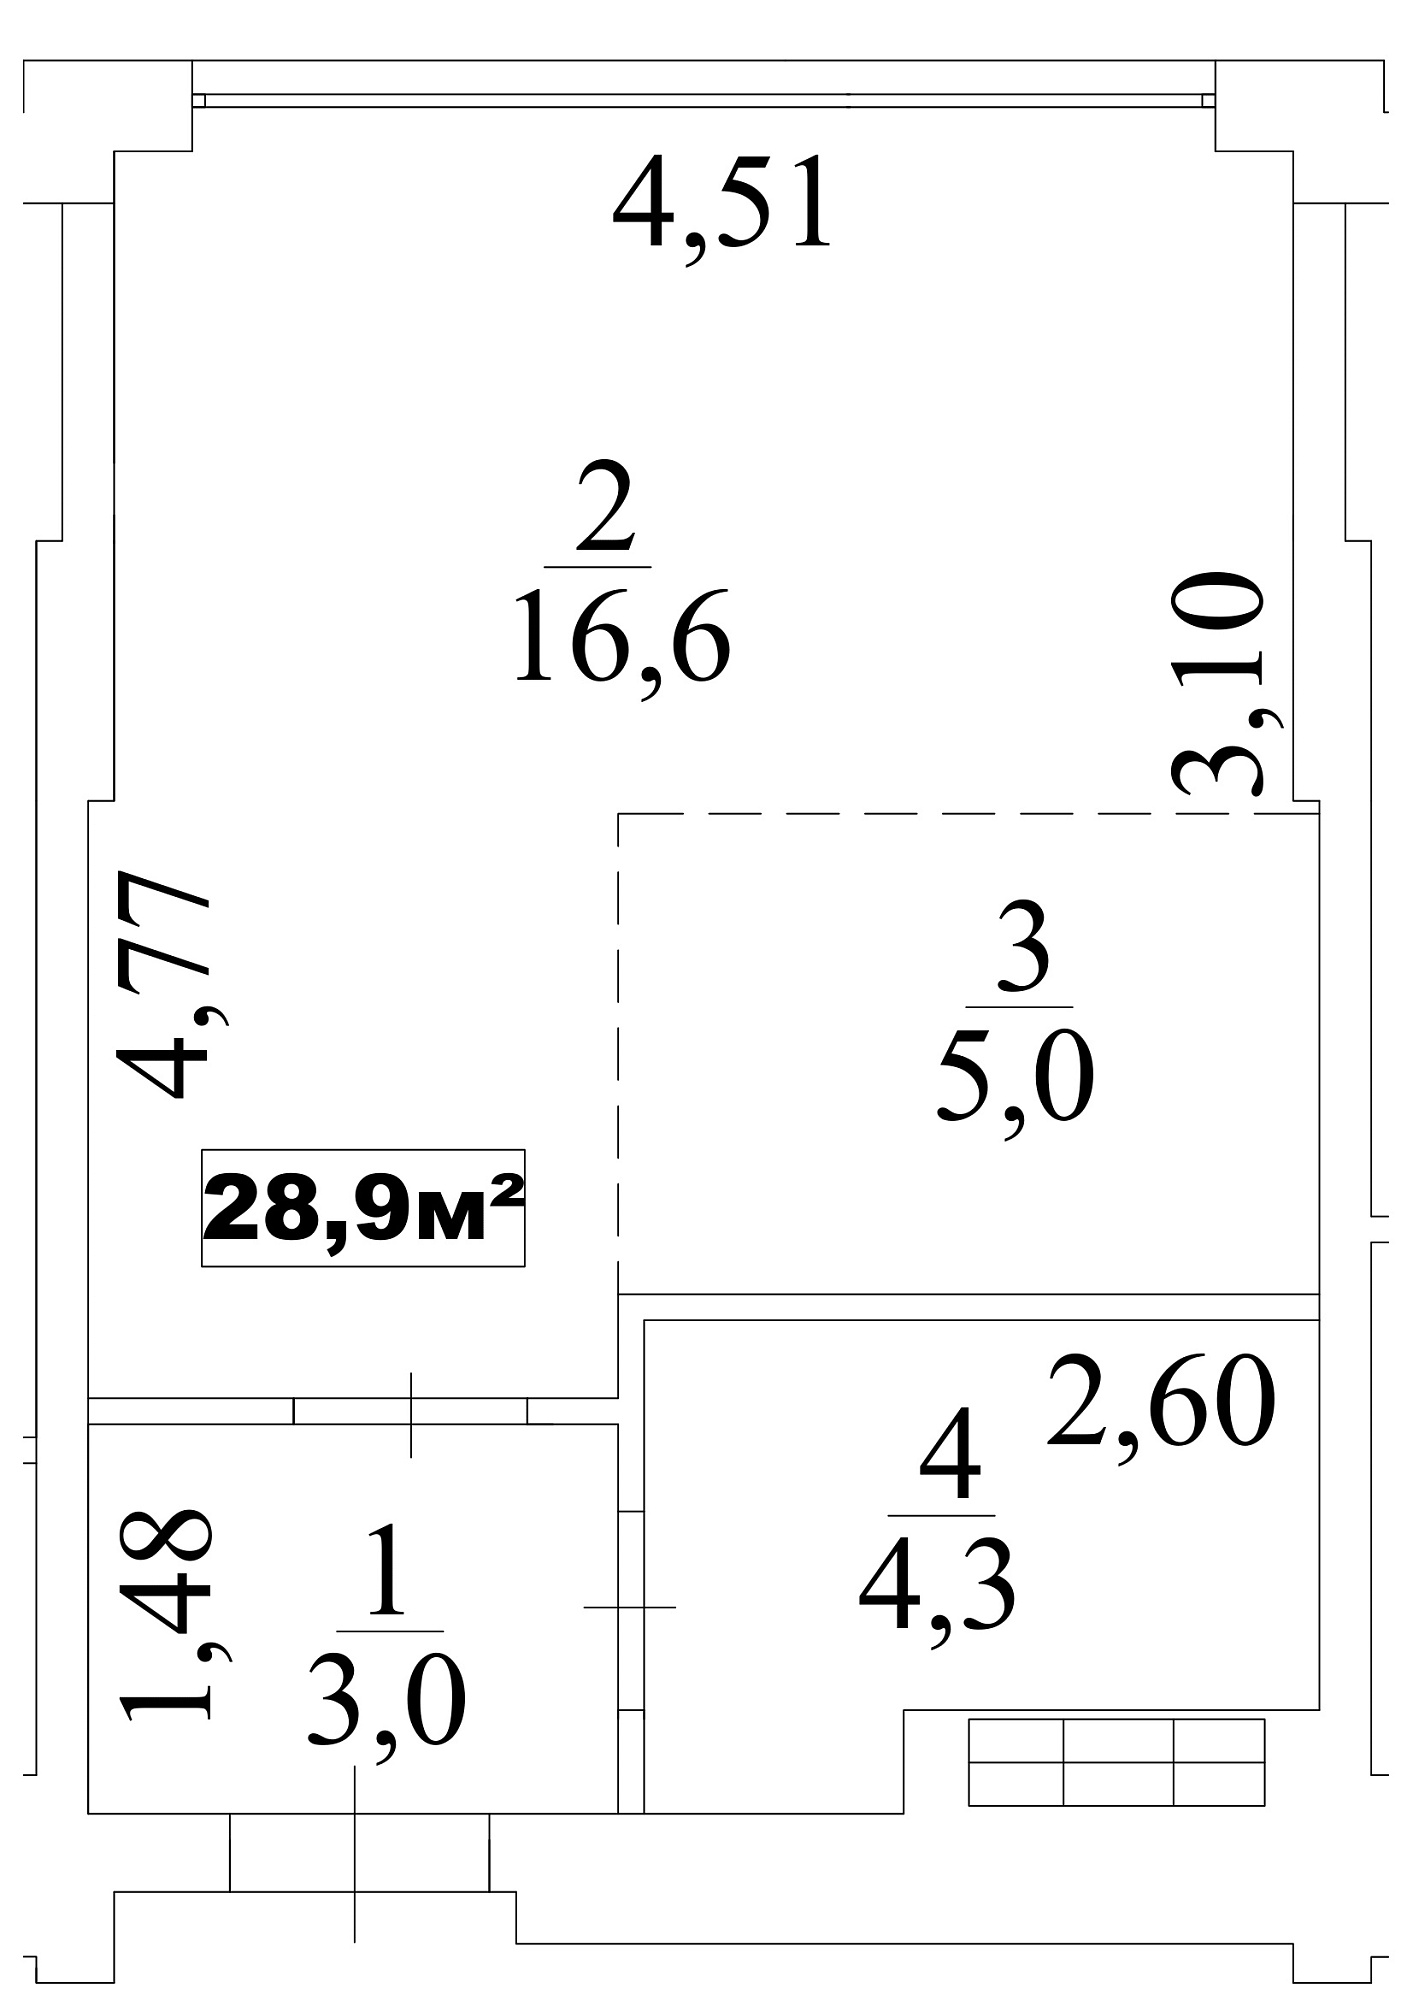 Planning Smart flats area 28.9m2, AB-10-10/00086.